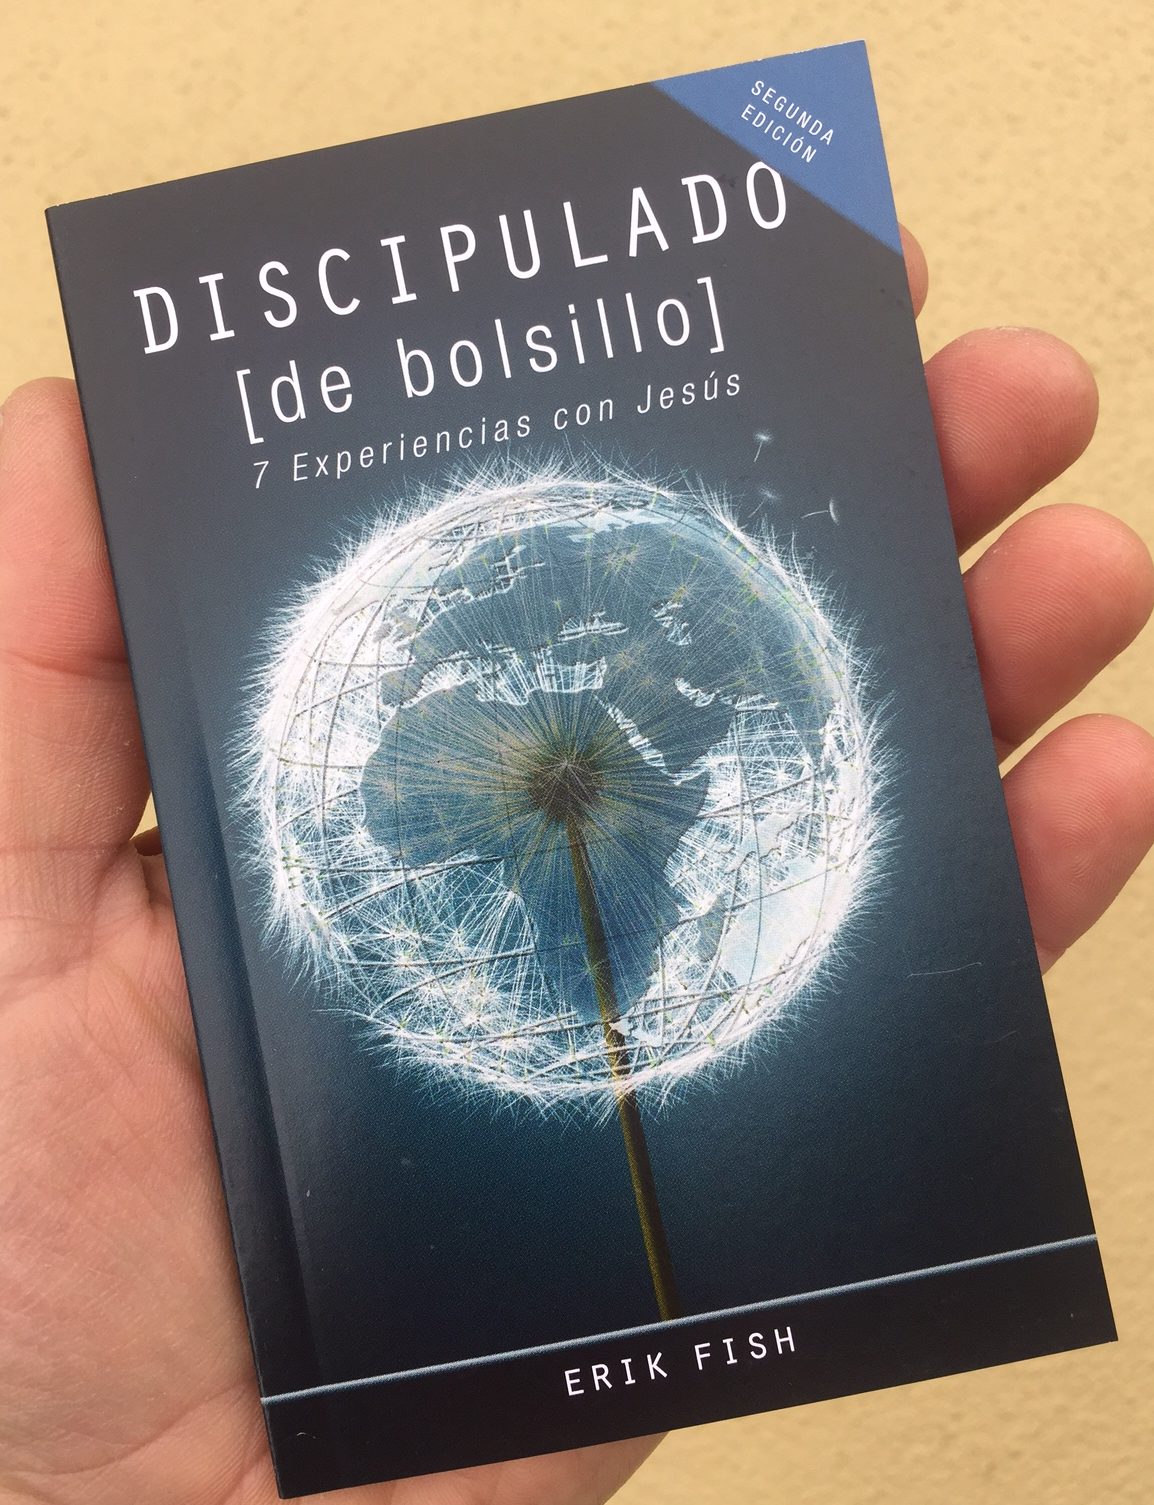 Discipulado de Bolsillo (Spanish Discipleship Book 10 pack)